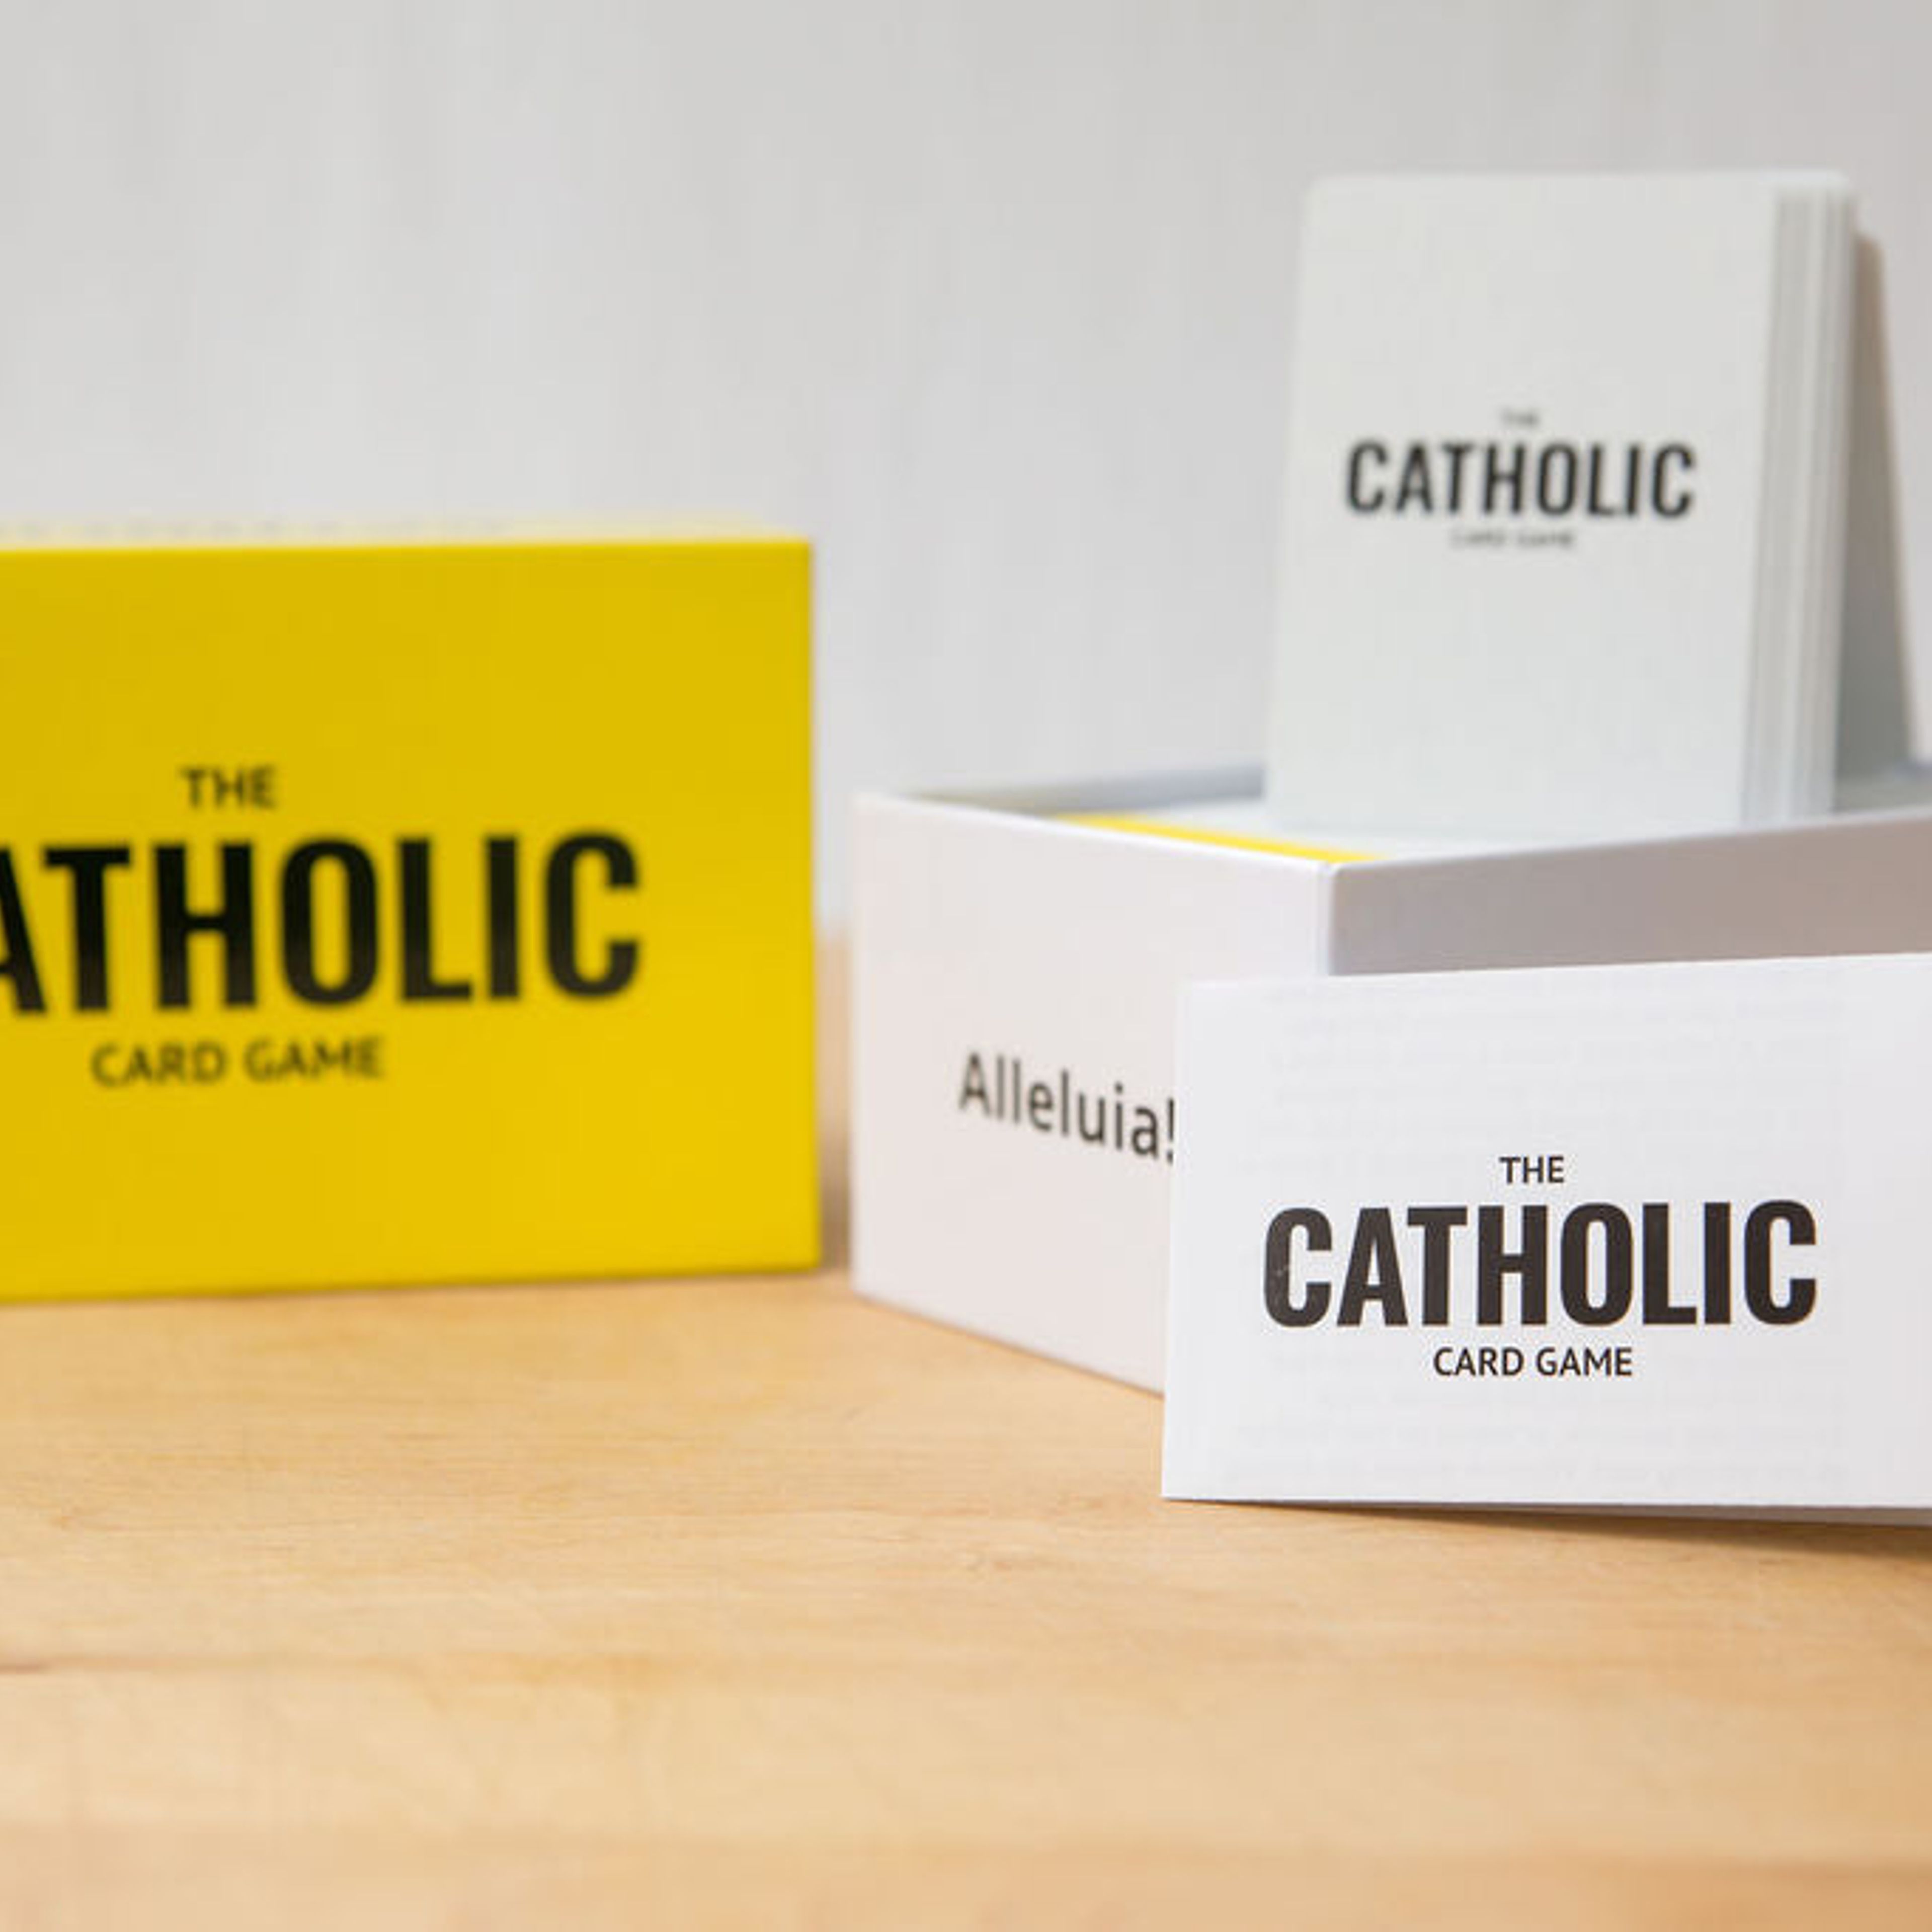 The Catholic Card Game